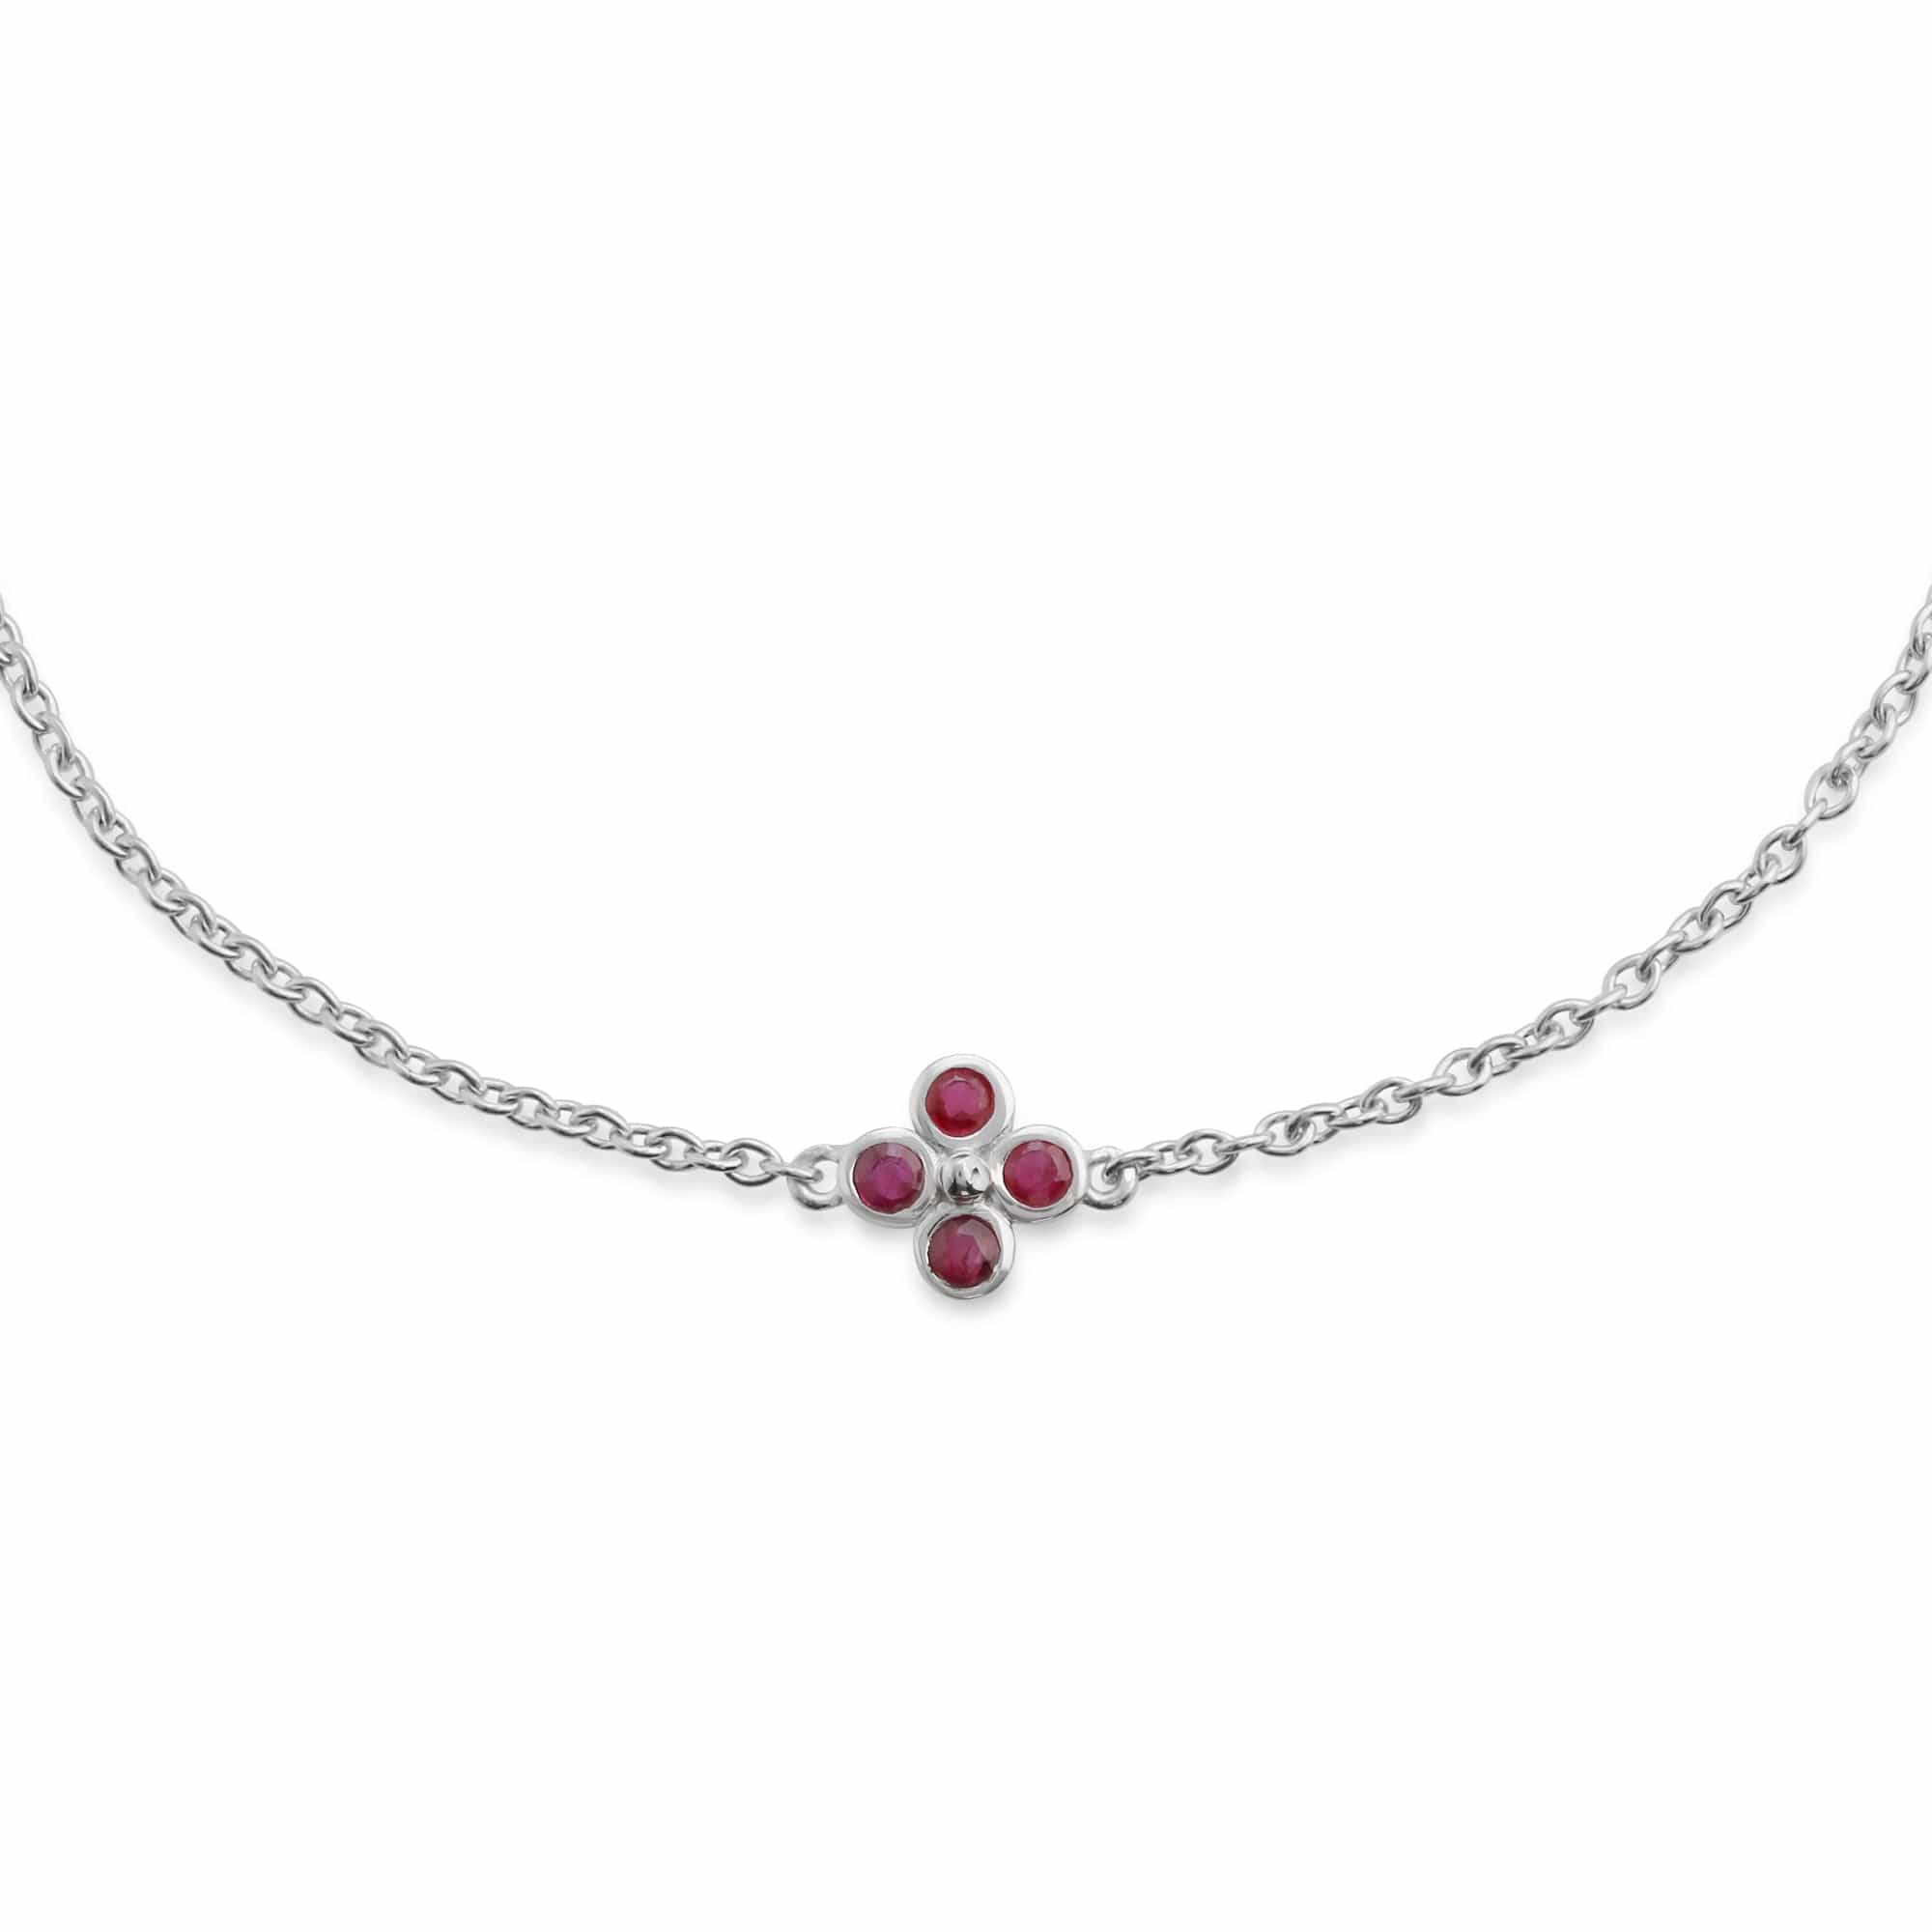 Floral Round Ruby Clover Stud Earrings & Bracelet Set in 925 Sterling Silver - Gemondo